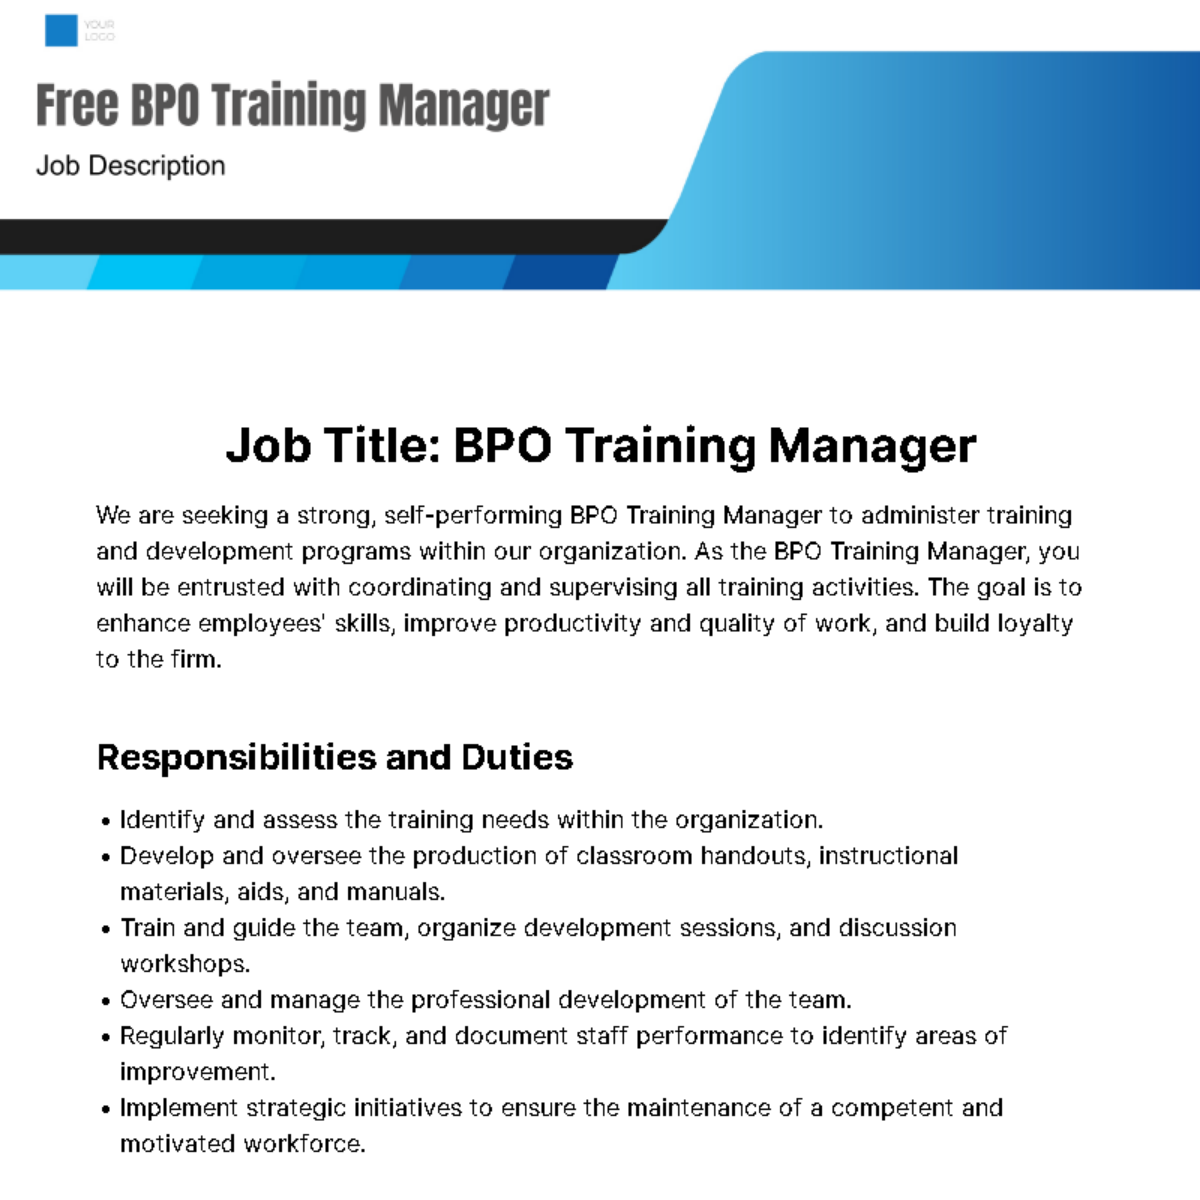 BPO Training Manager Job Description Template